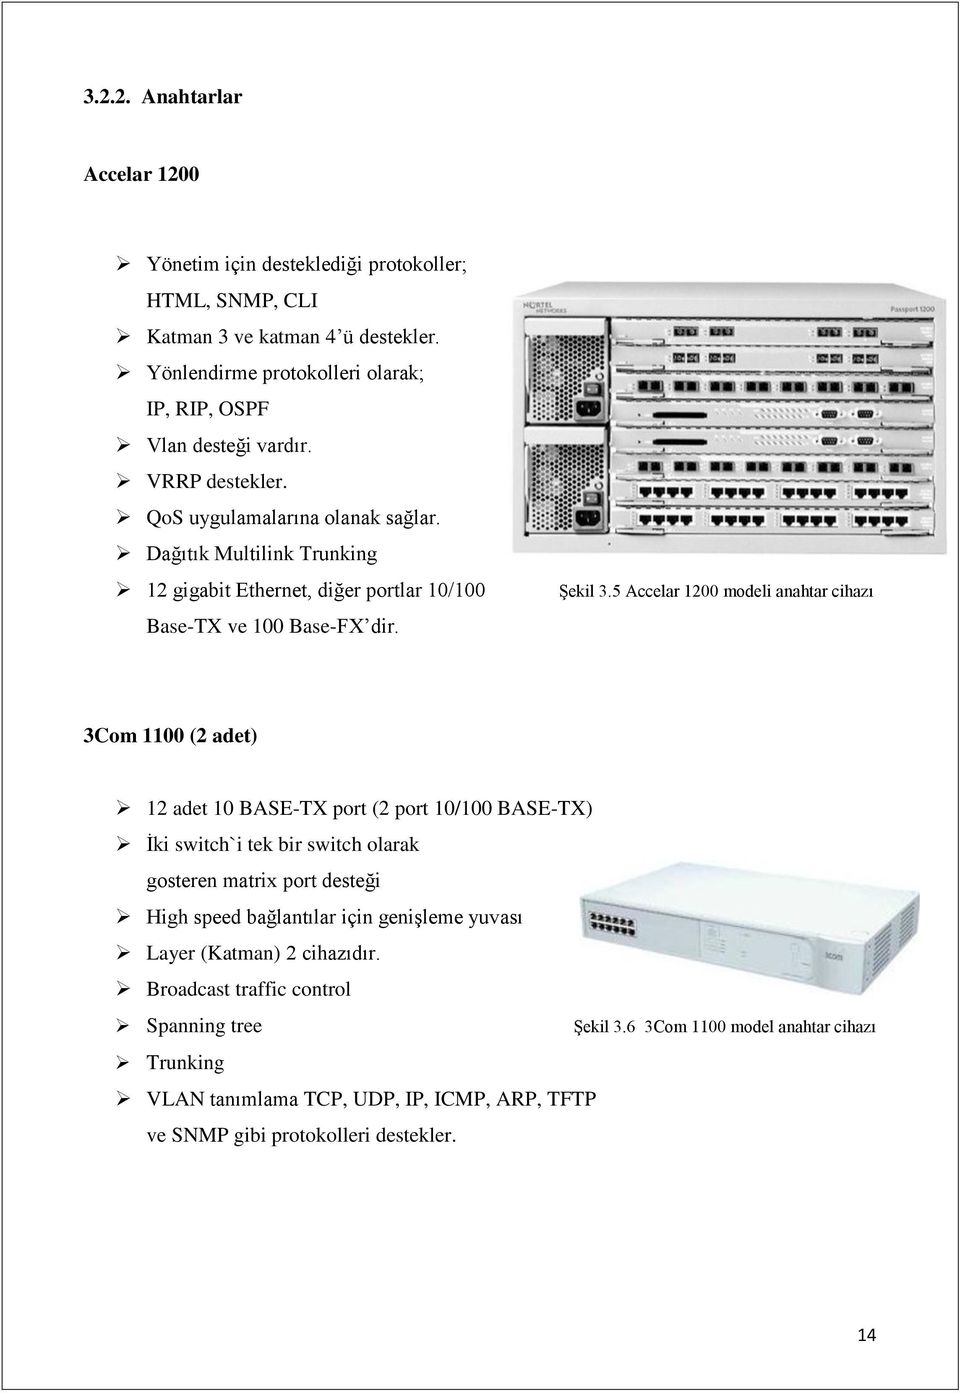 5 Accelar 1200 modeli anahtar cihazı 3Com 1100 (2 adet) 12 adet 10 BASE-TX port (2 port 10/100 BASE-TX) İki switch`i tek bir switch olarak gosteren matrix port desteği High speed